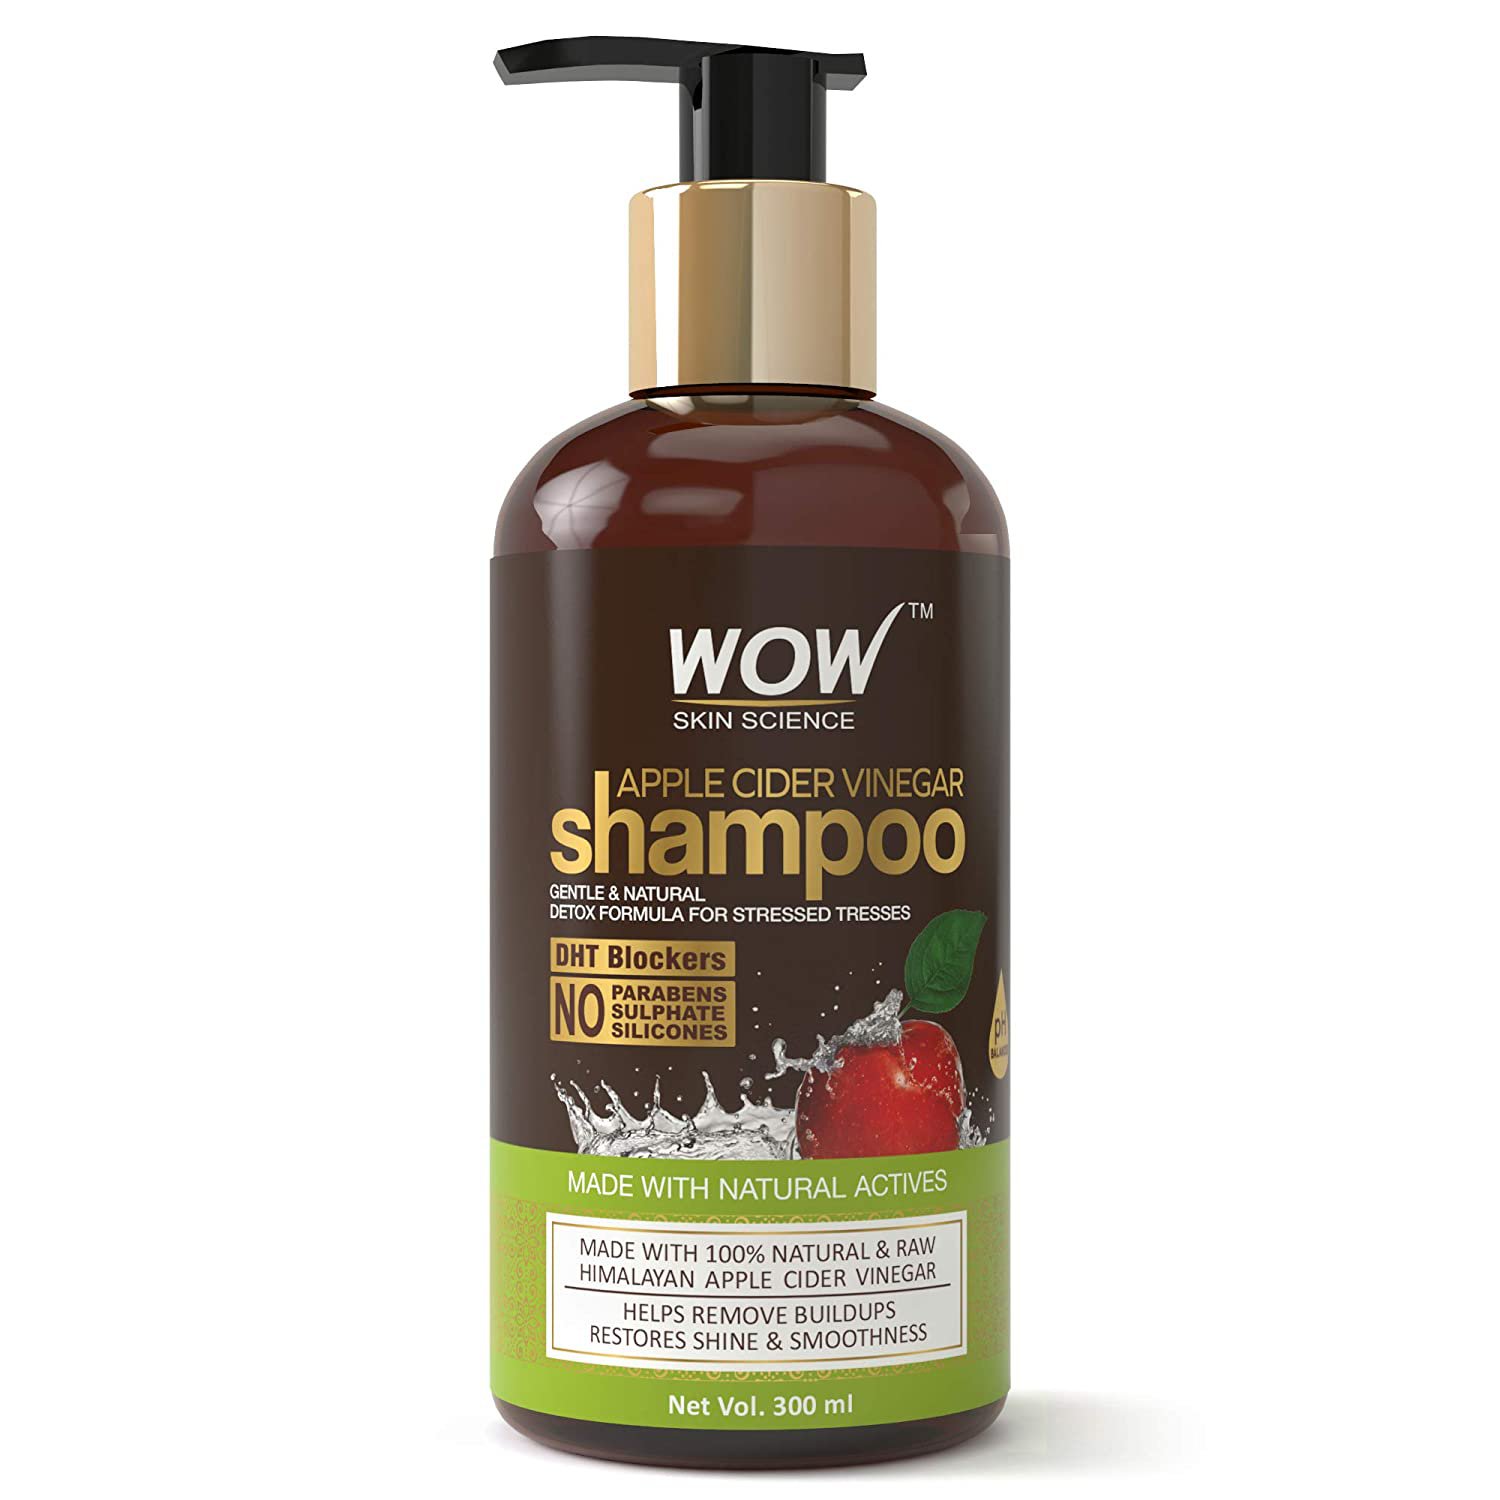 Apple Cider Vinegar Shampoo from WOW Organics